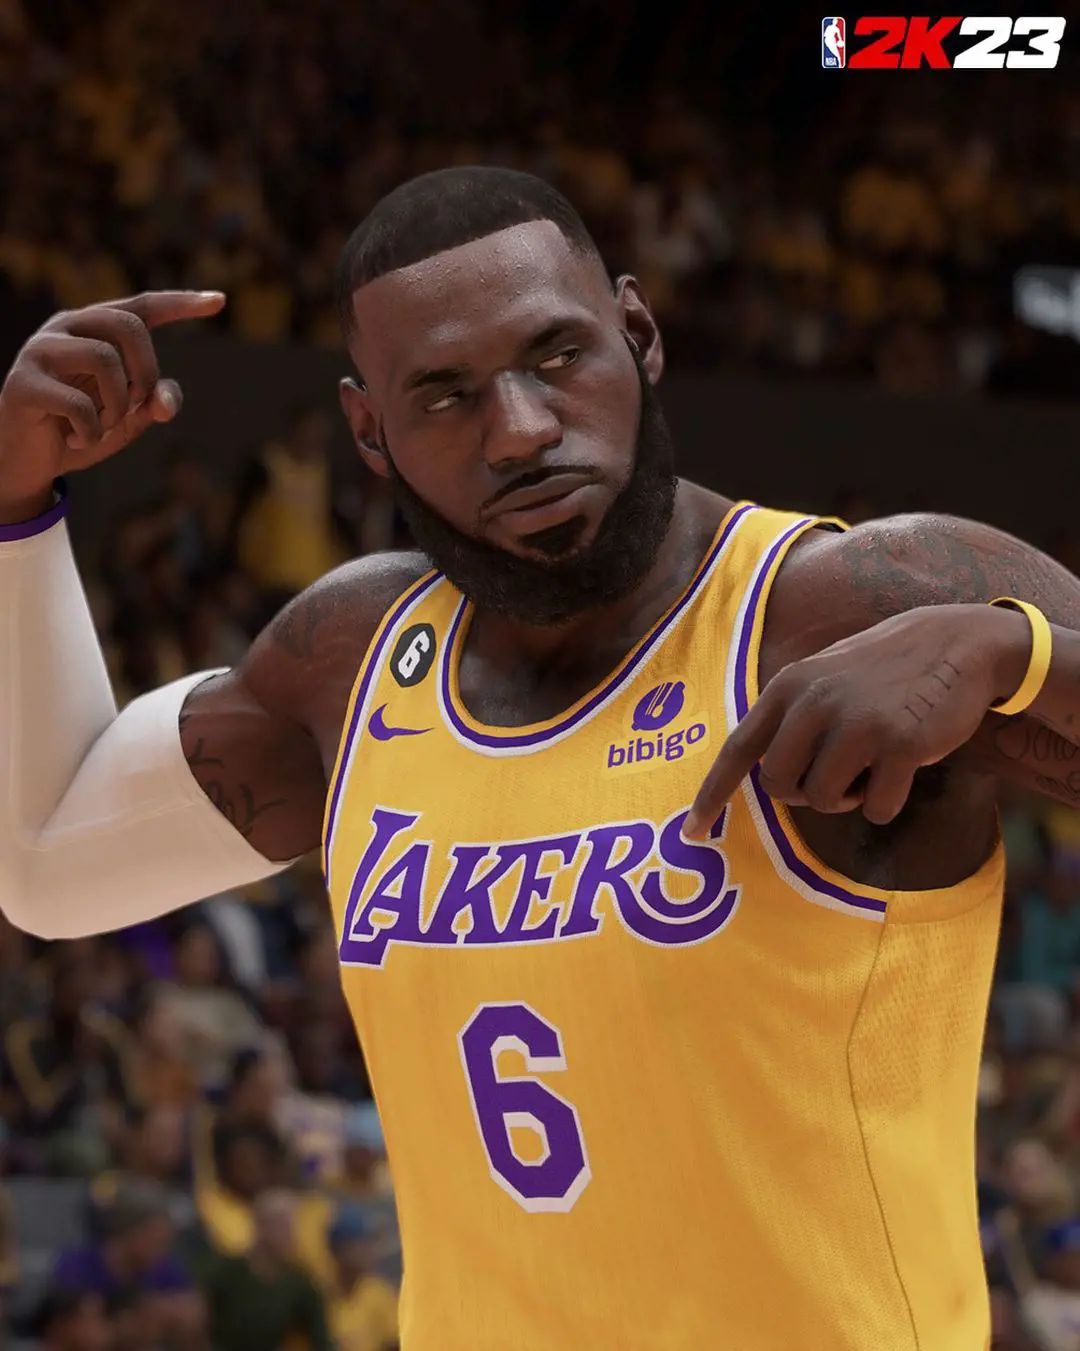 Lakers star LeBron James in 2k23